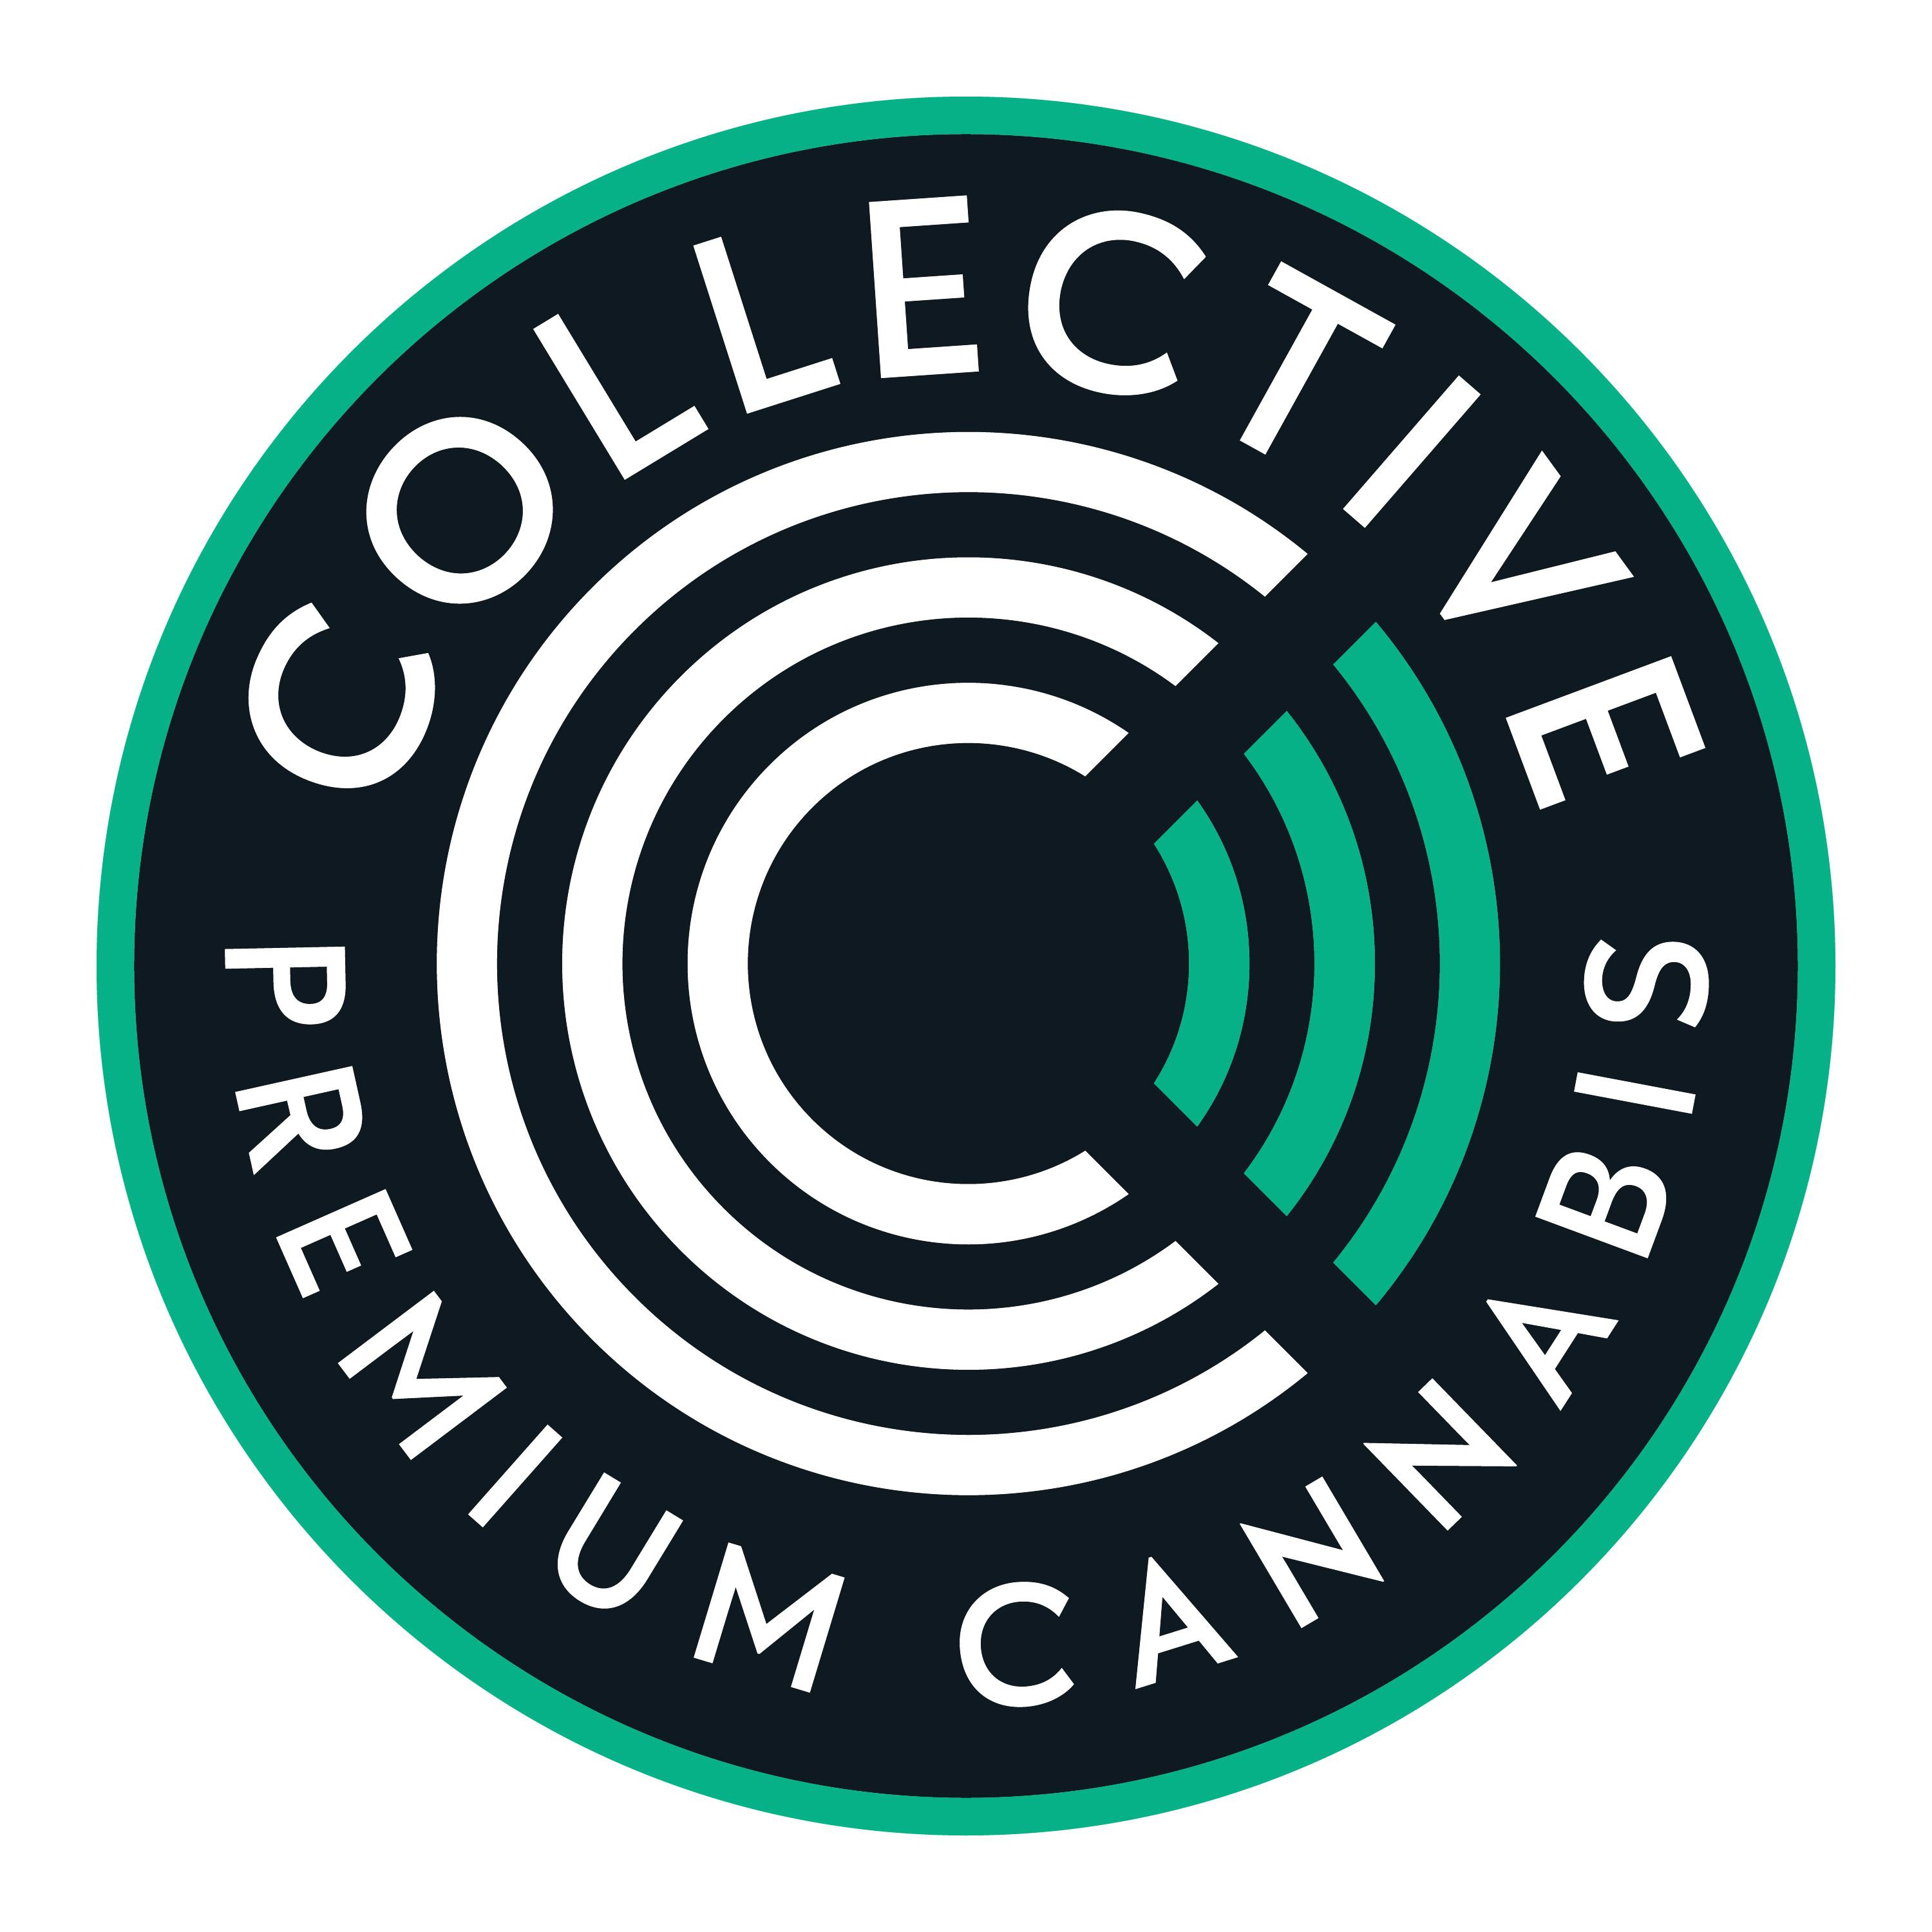 Collective Premium Cannabis Billerica